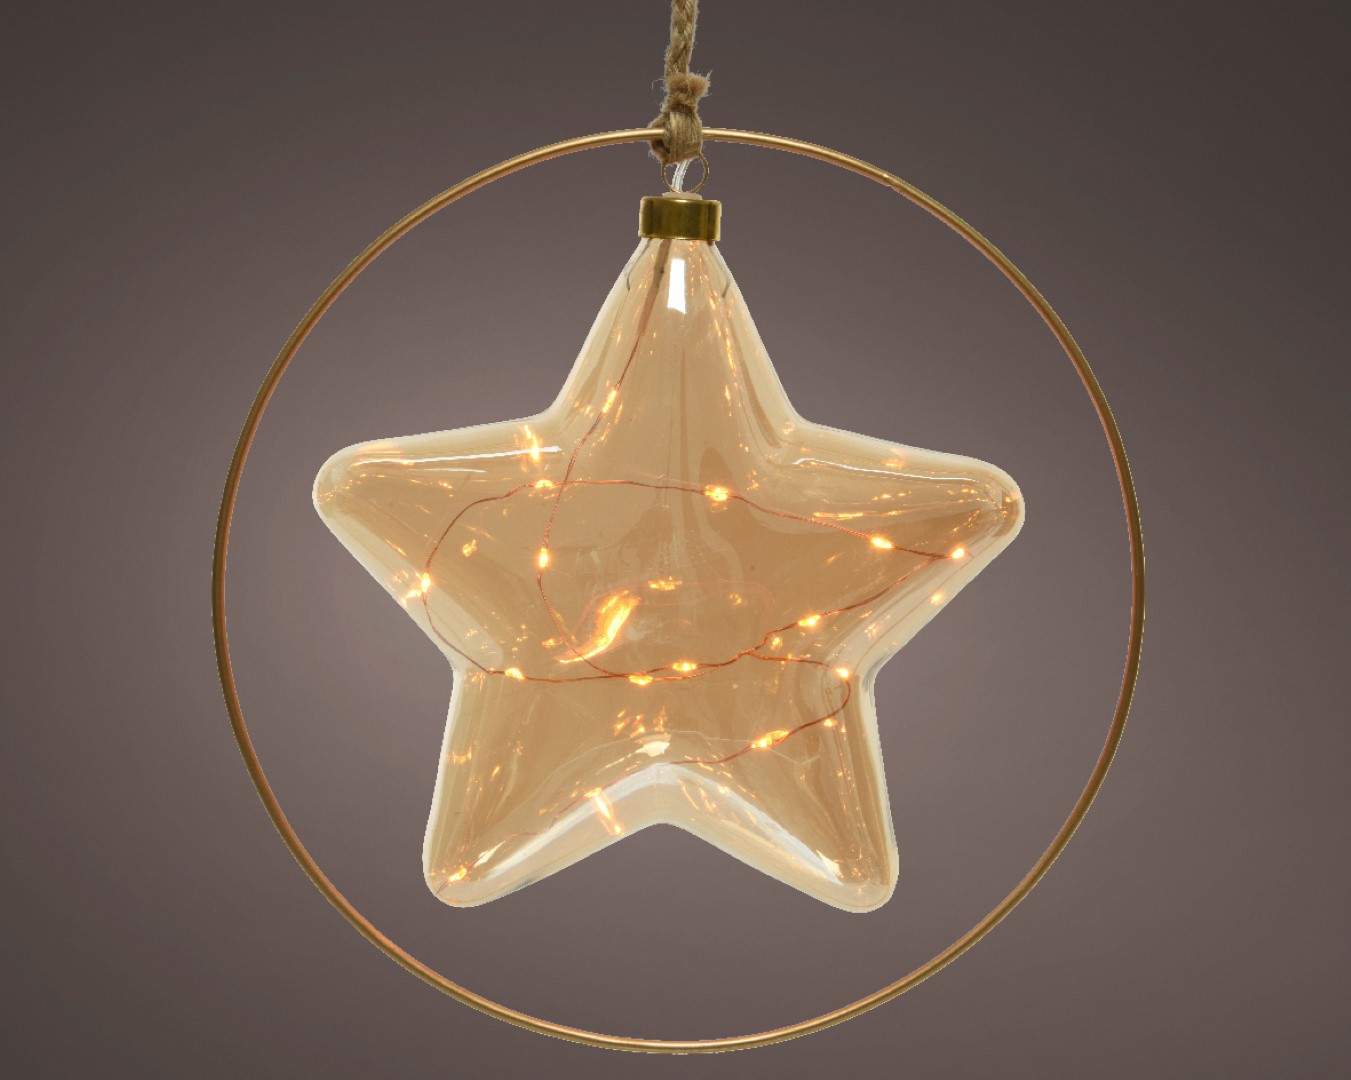 Kerstster met jute touw en koperen ring - 15 LED lampjes - 26cm - Amber glas